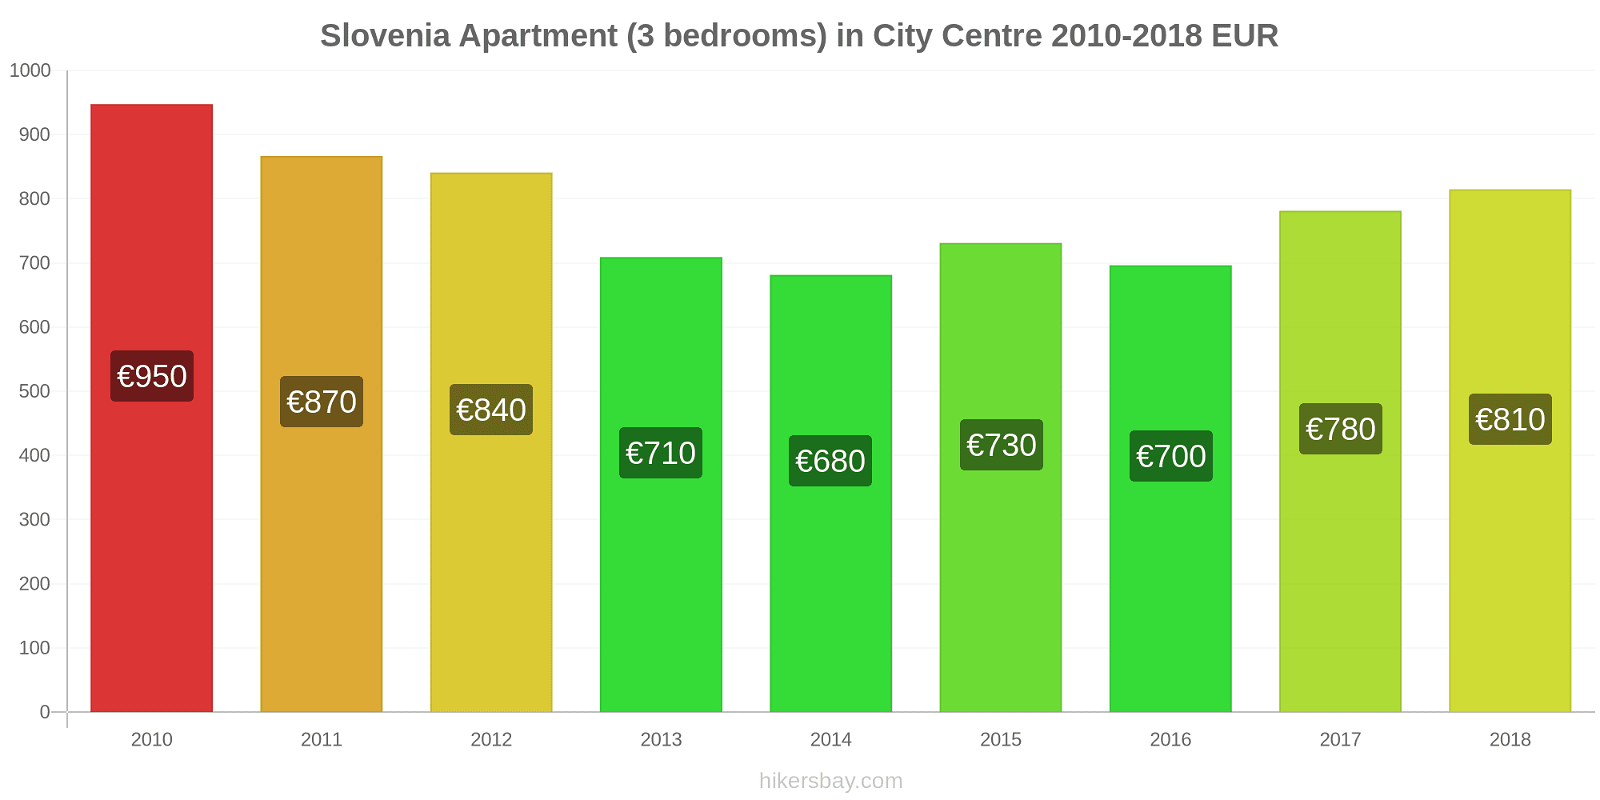 Slovenia price changes Apartment (3 bedrooms) in City Centre hikersbay.com